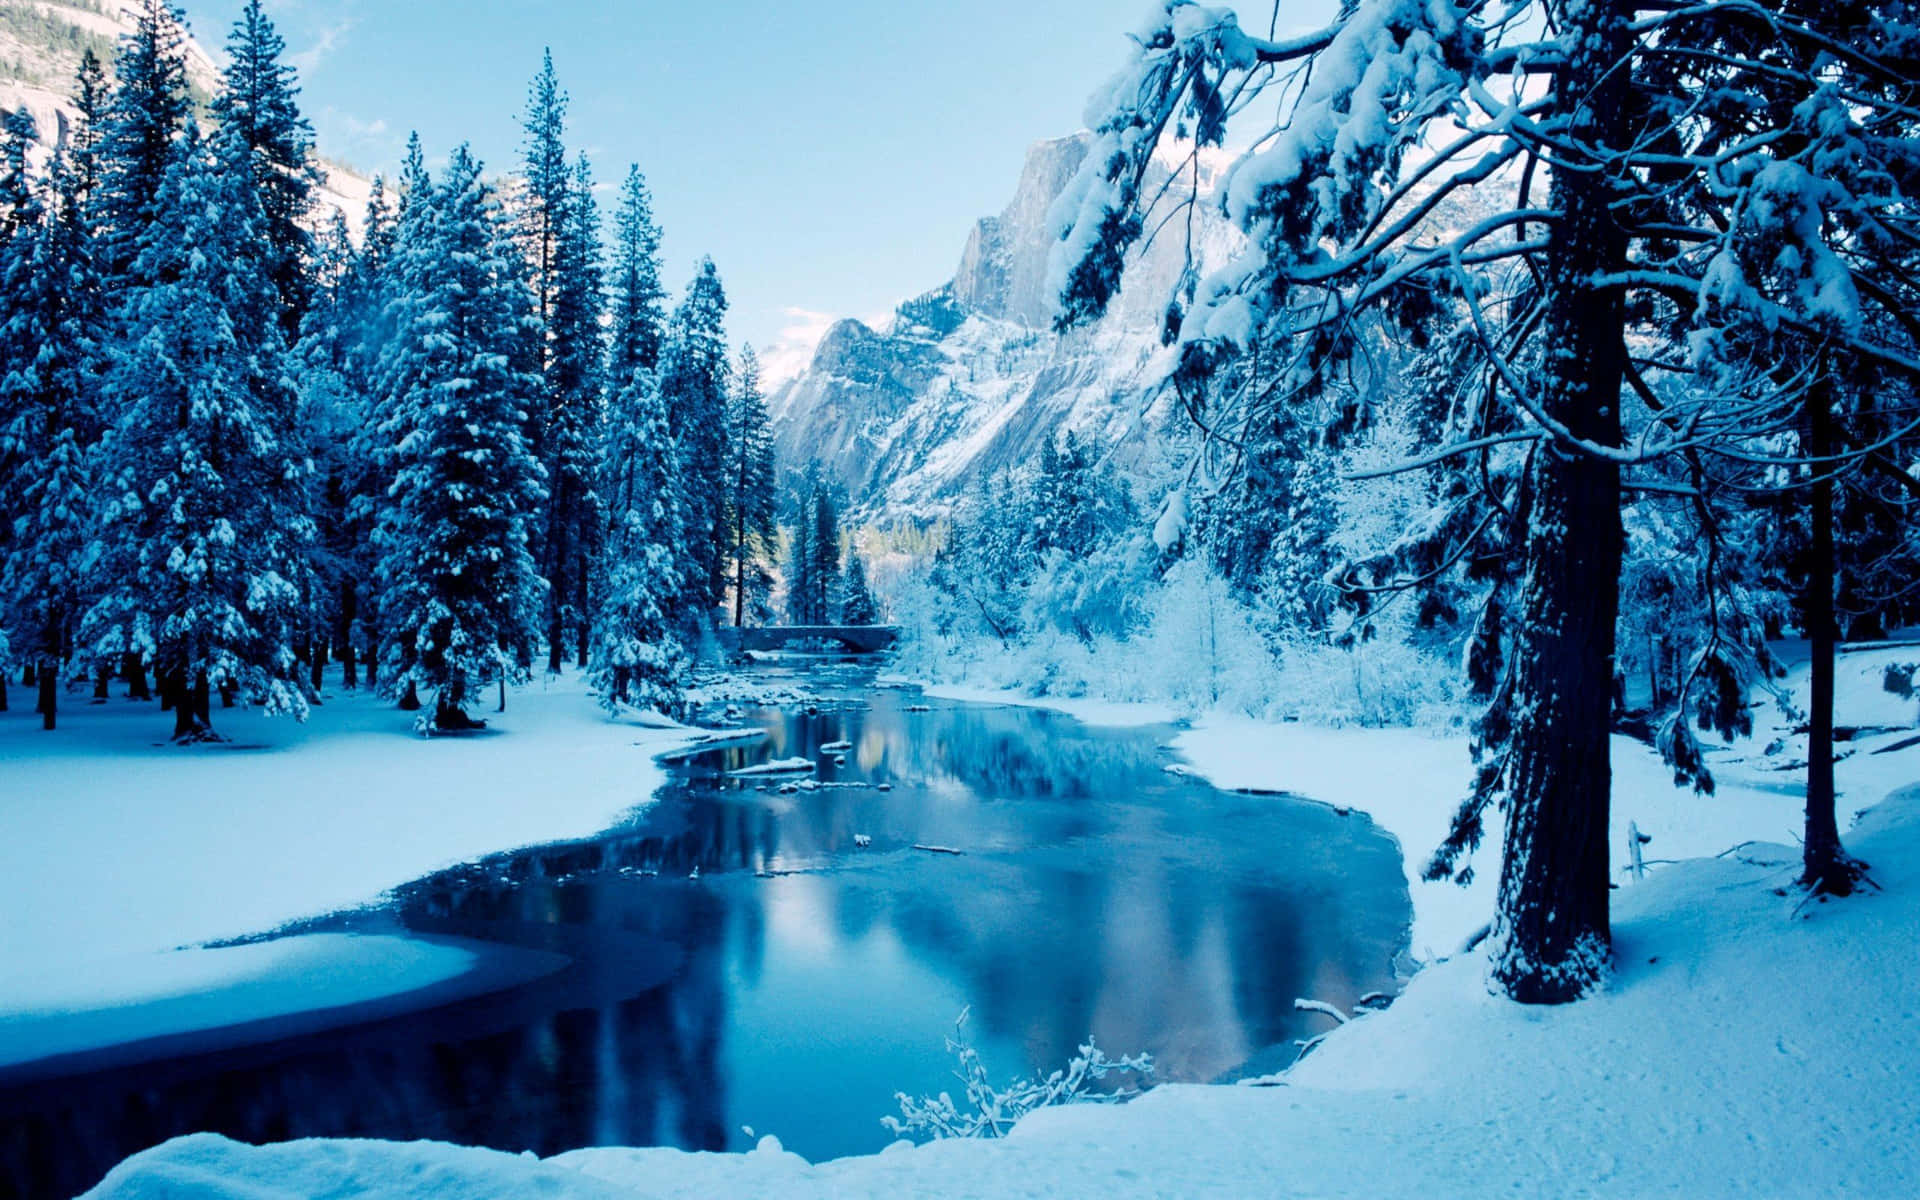 Snow-Covered Hills in rural winter landscape Wallpaper